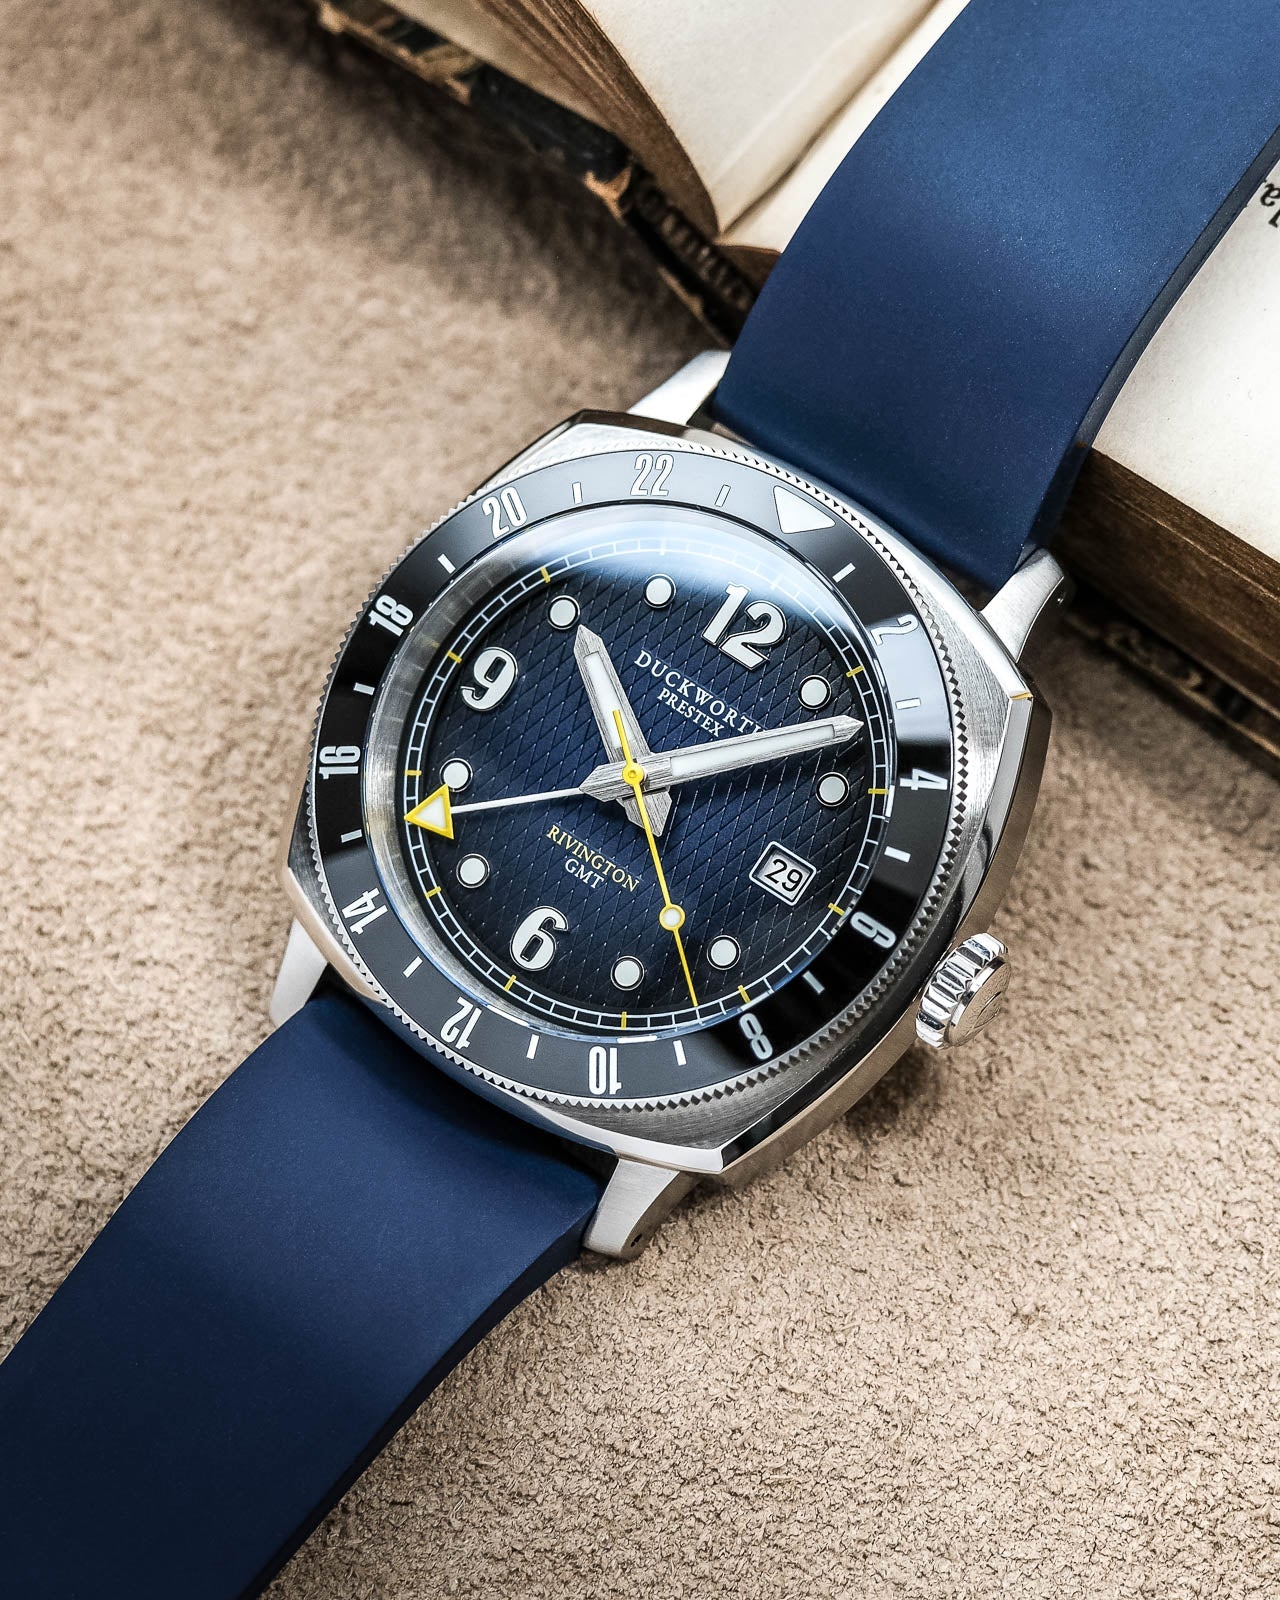 
                  
                    Rivington GMT watch blue dial on blue rubber
                  
                